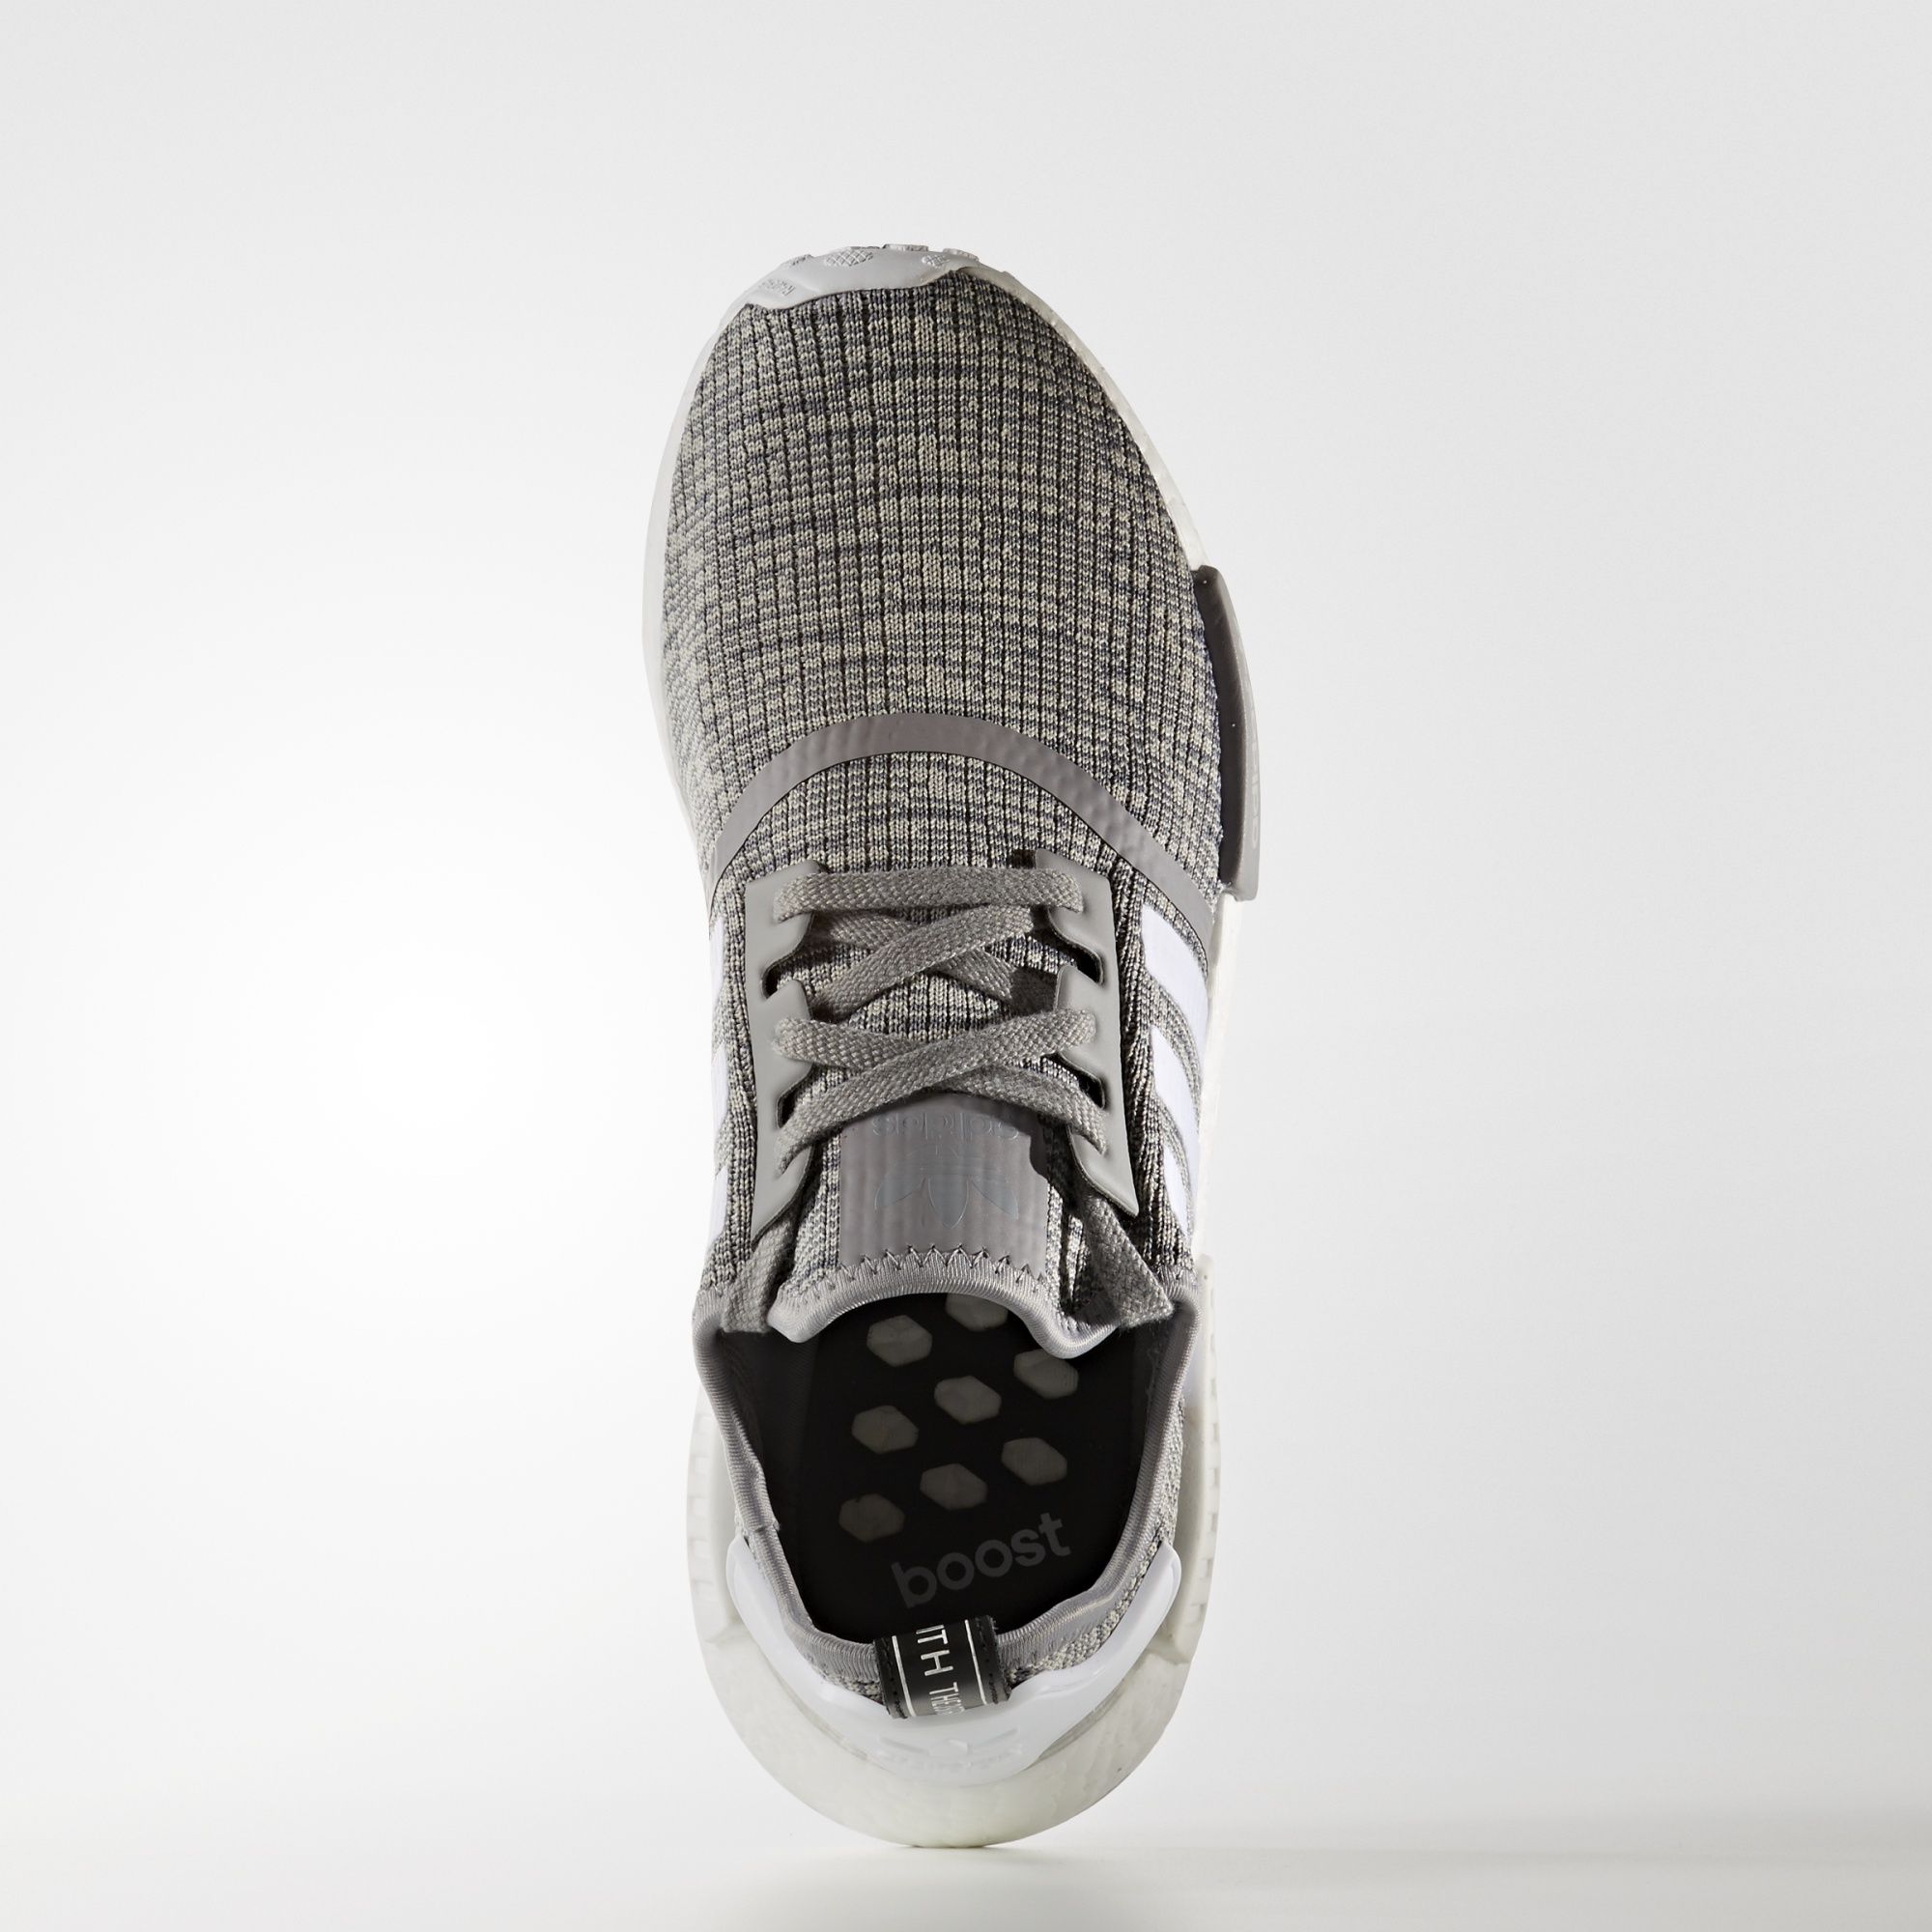 Adidas NMD_R1
Solid Grey / White